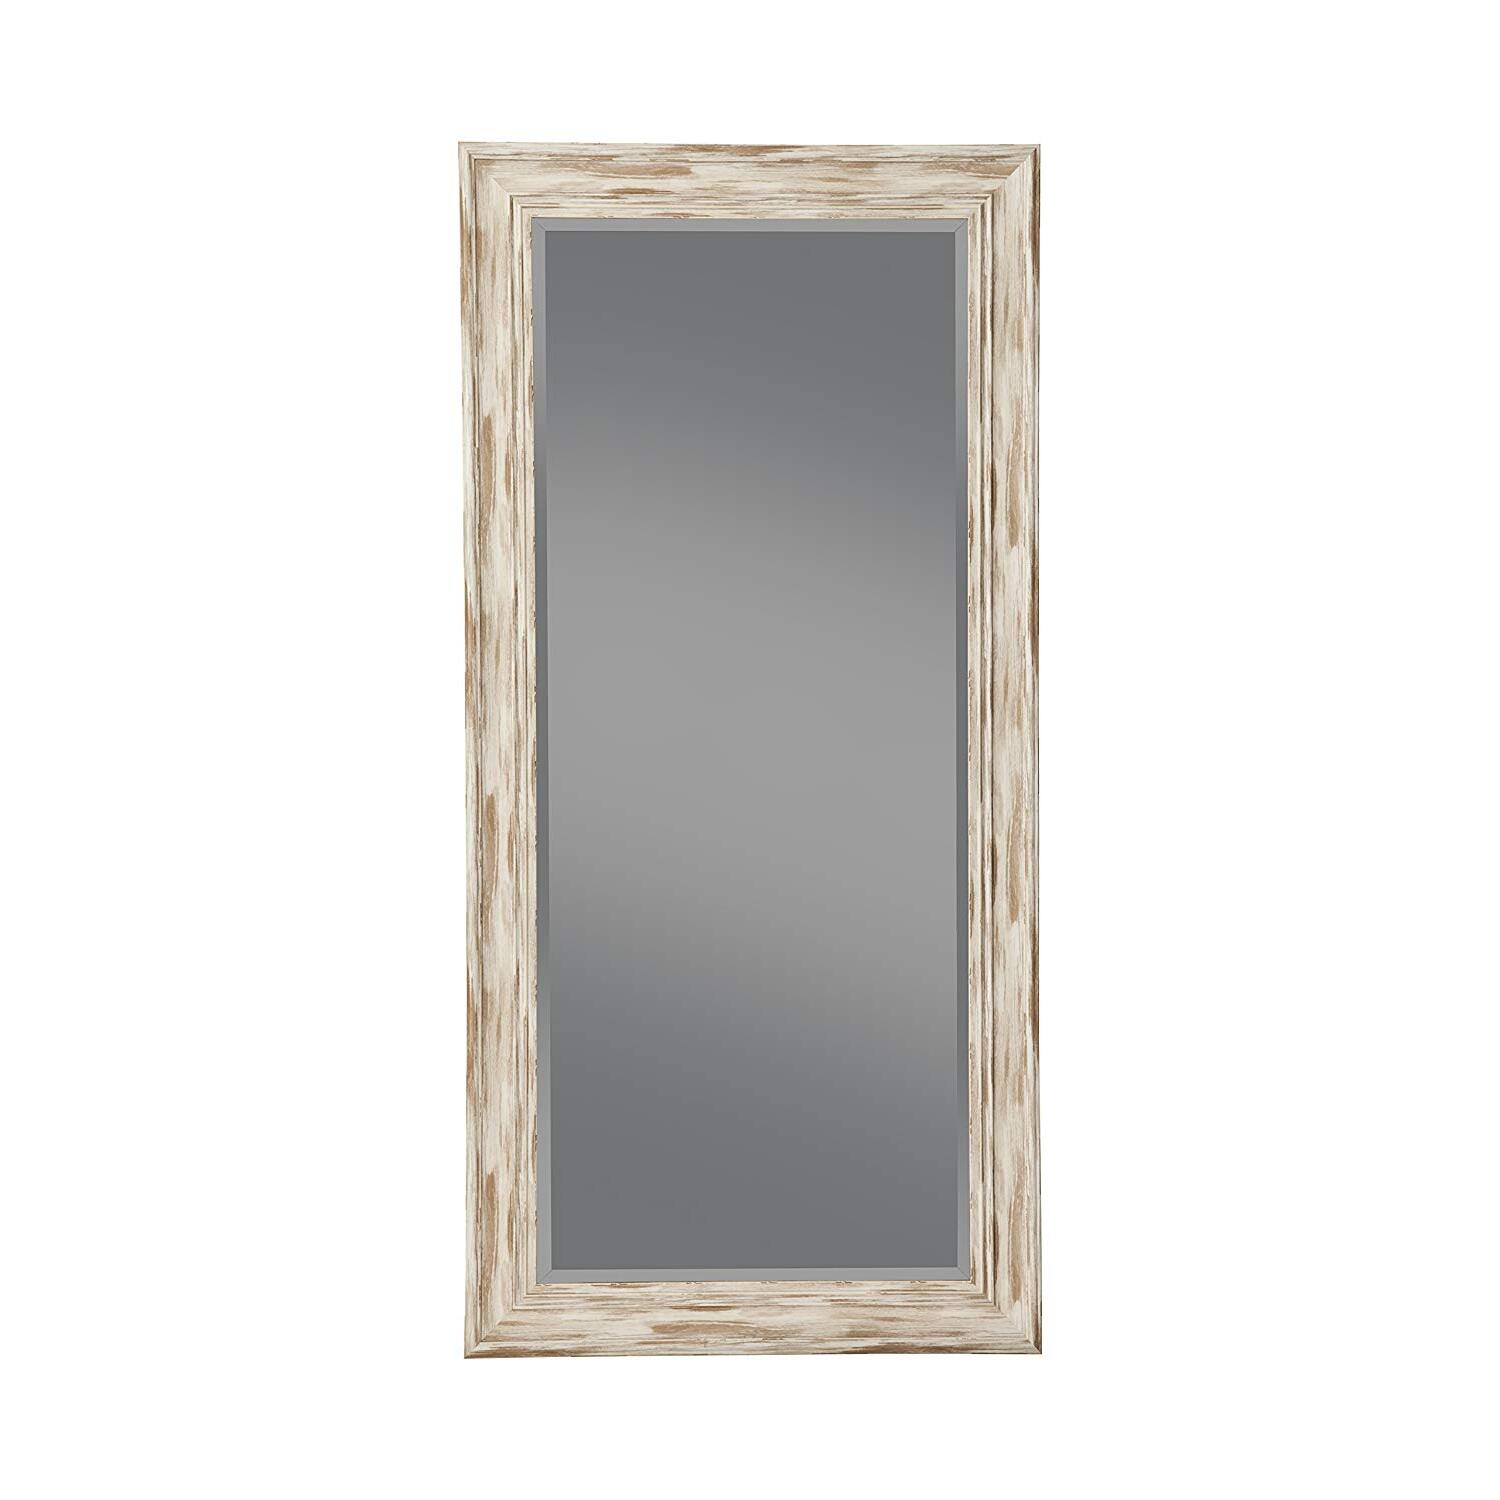 Sandberg Furniture Farmhouse Full Length Leaner Mirror-Finish:Antique White Wash